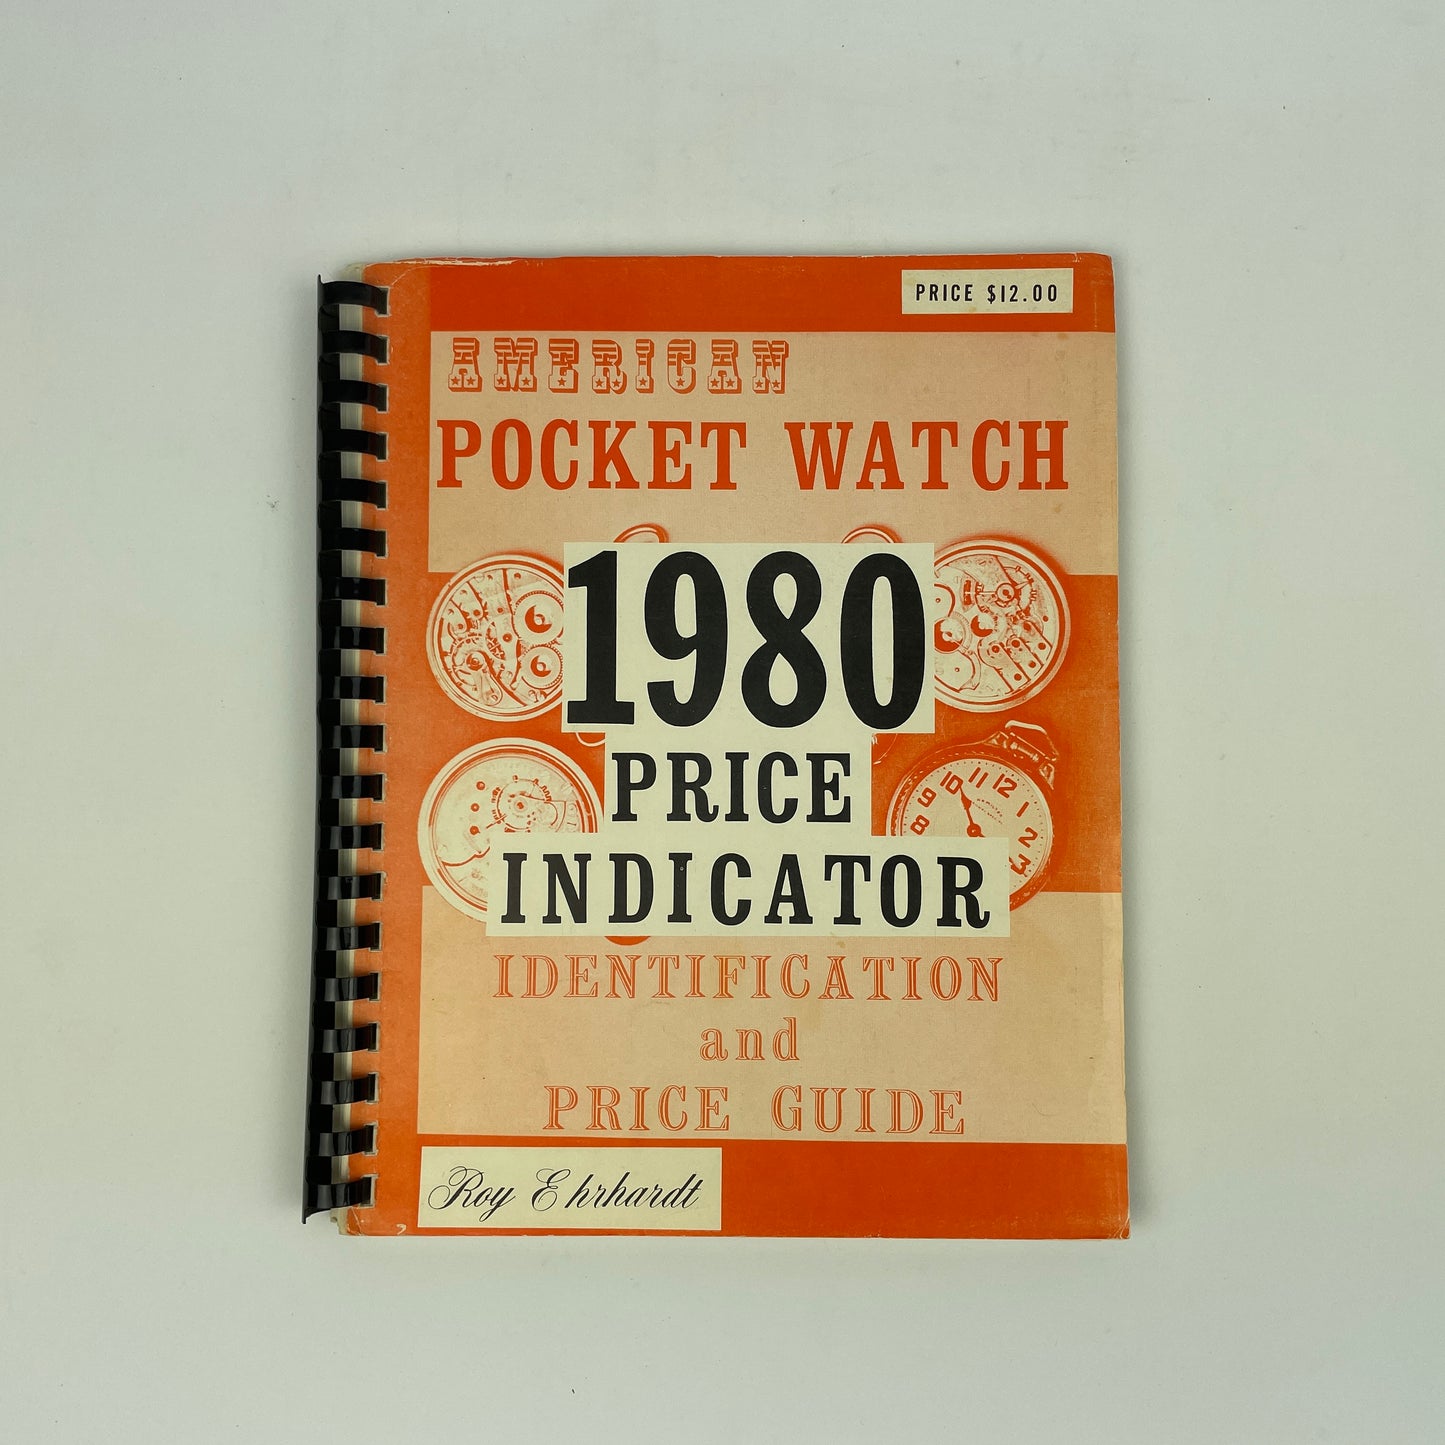 Lot 79- American Pocket Watch 1978 & 1980 Price Indicator